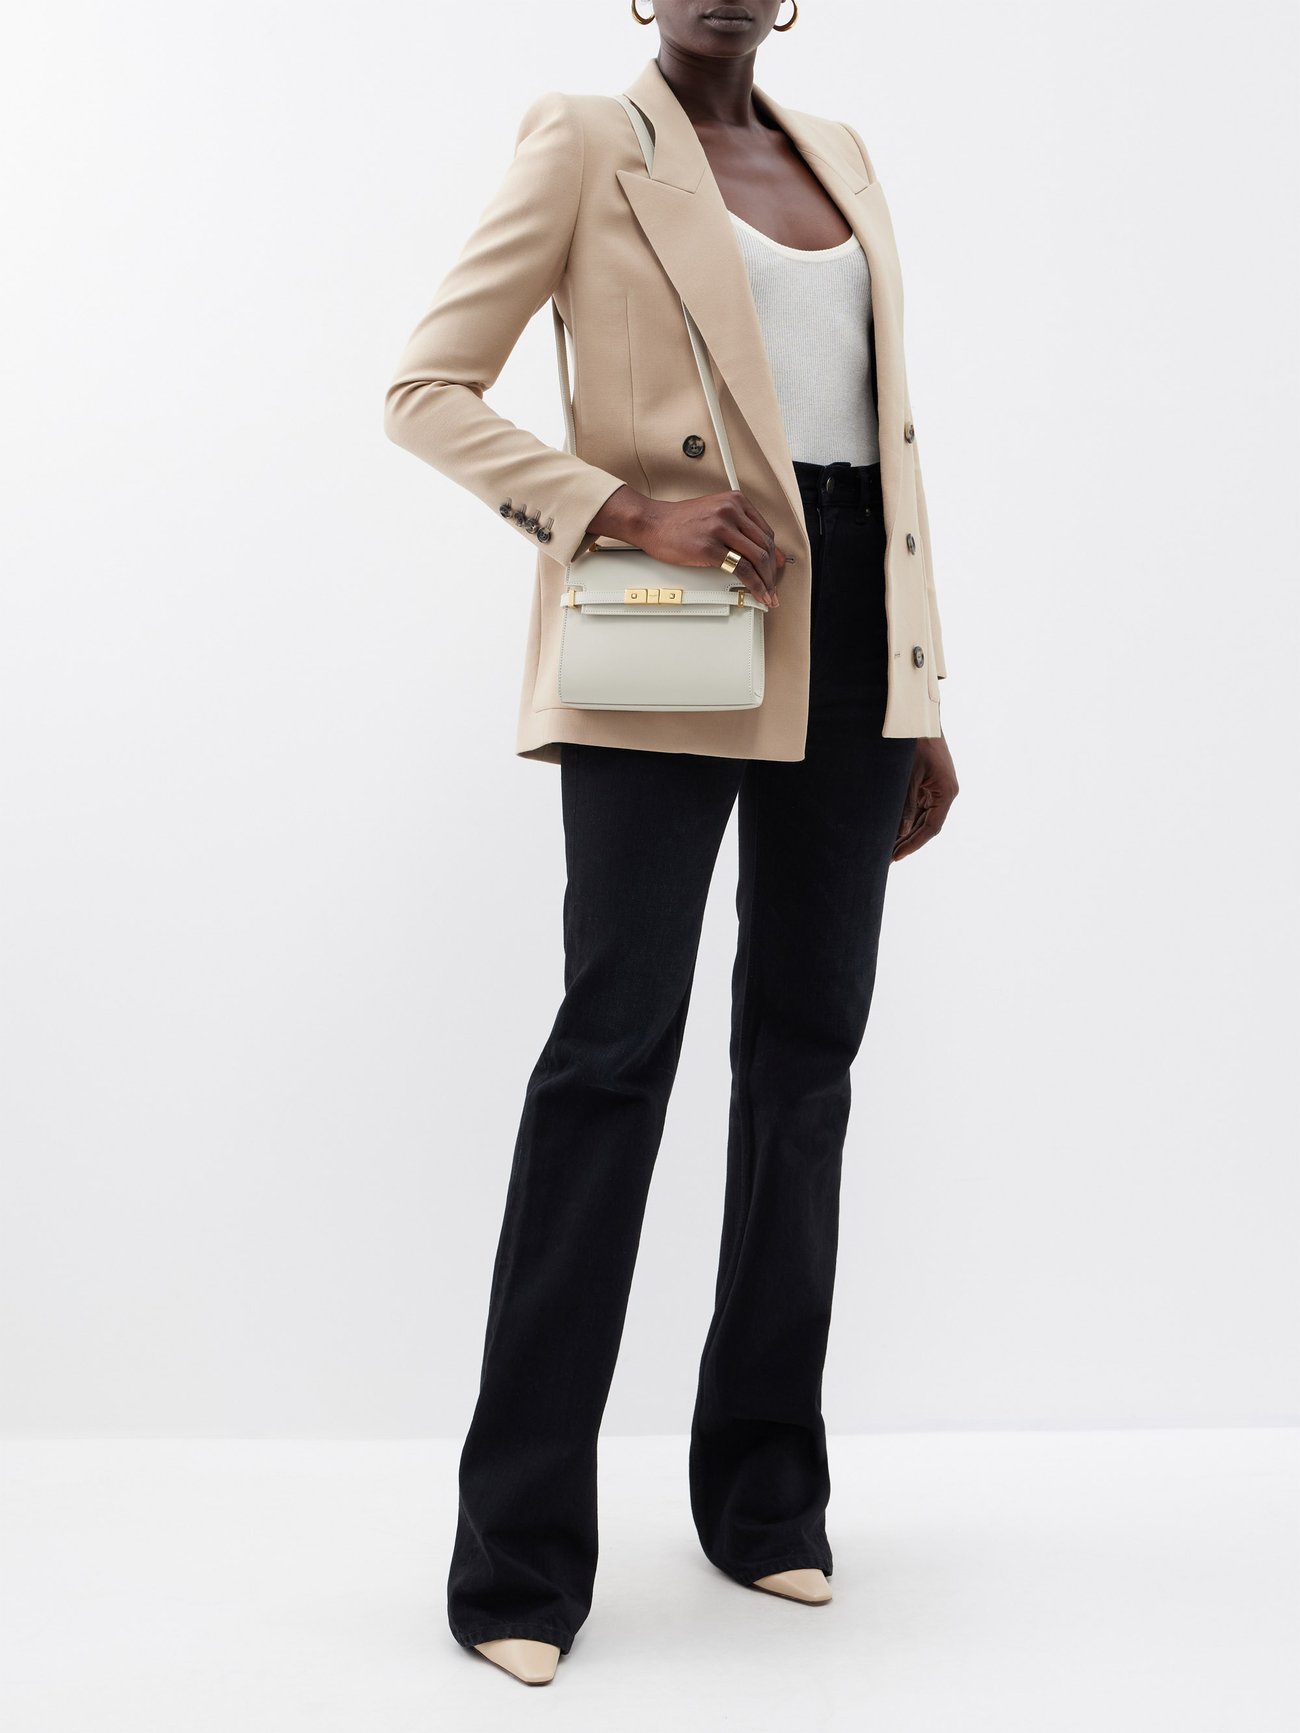 Manhattan Mini Leather Shoulder Bag in White - Saint Laurent